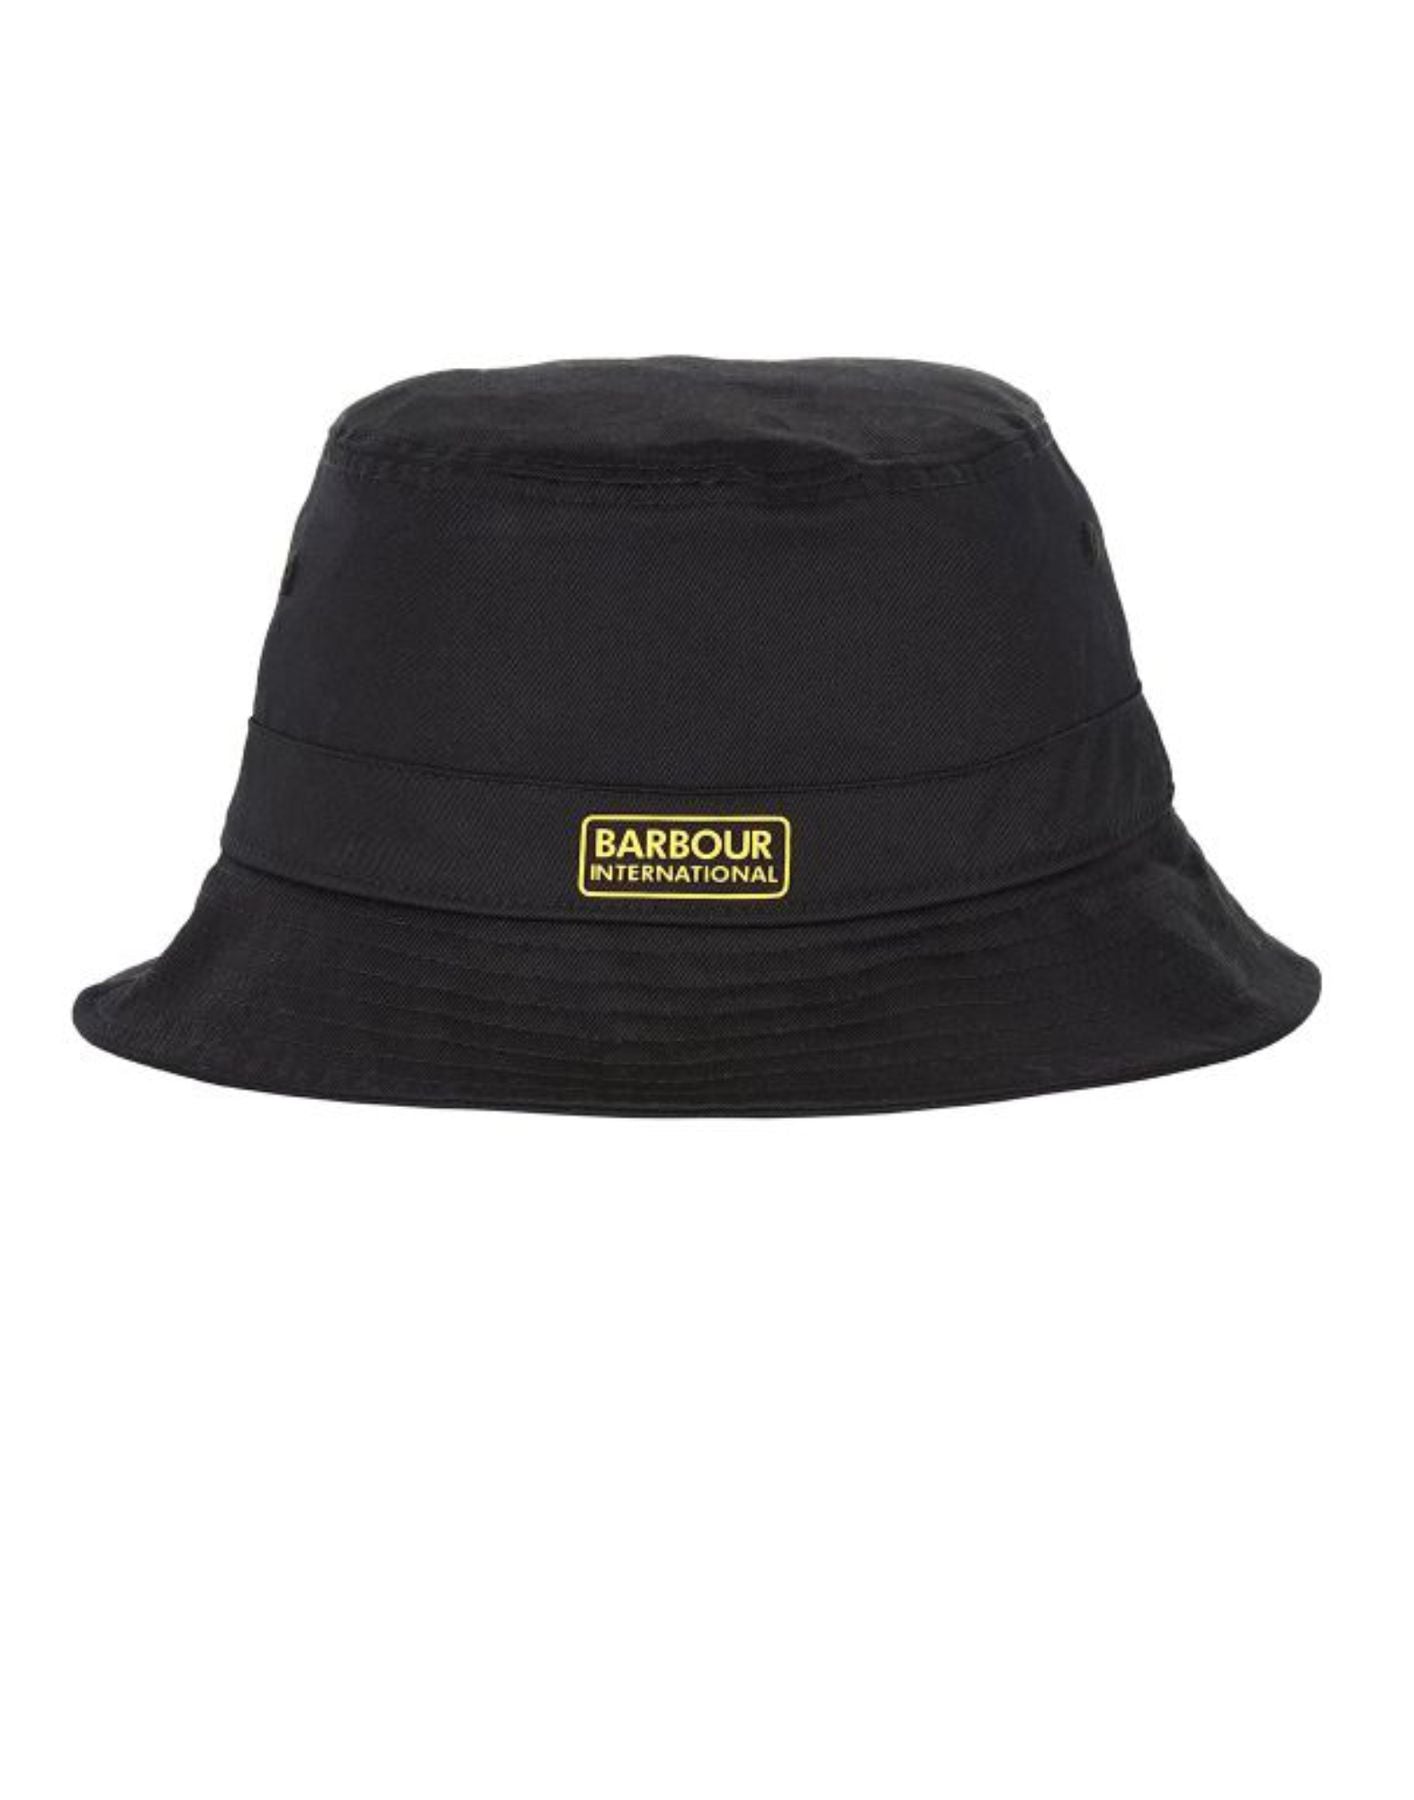 Sombrero para el hombre mha0687bk11 BARBOUR INTERNATIONAL